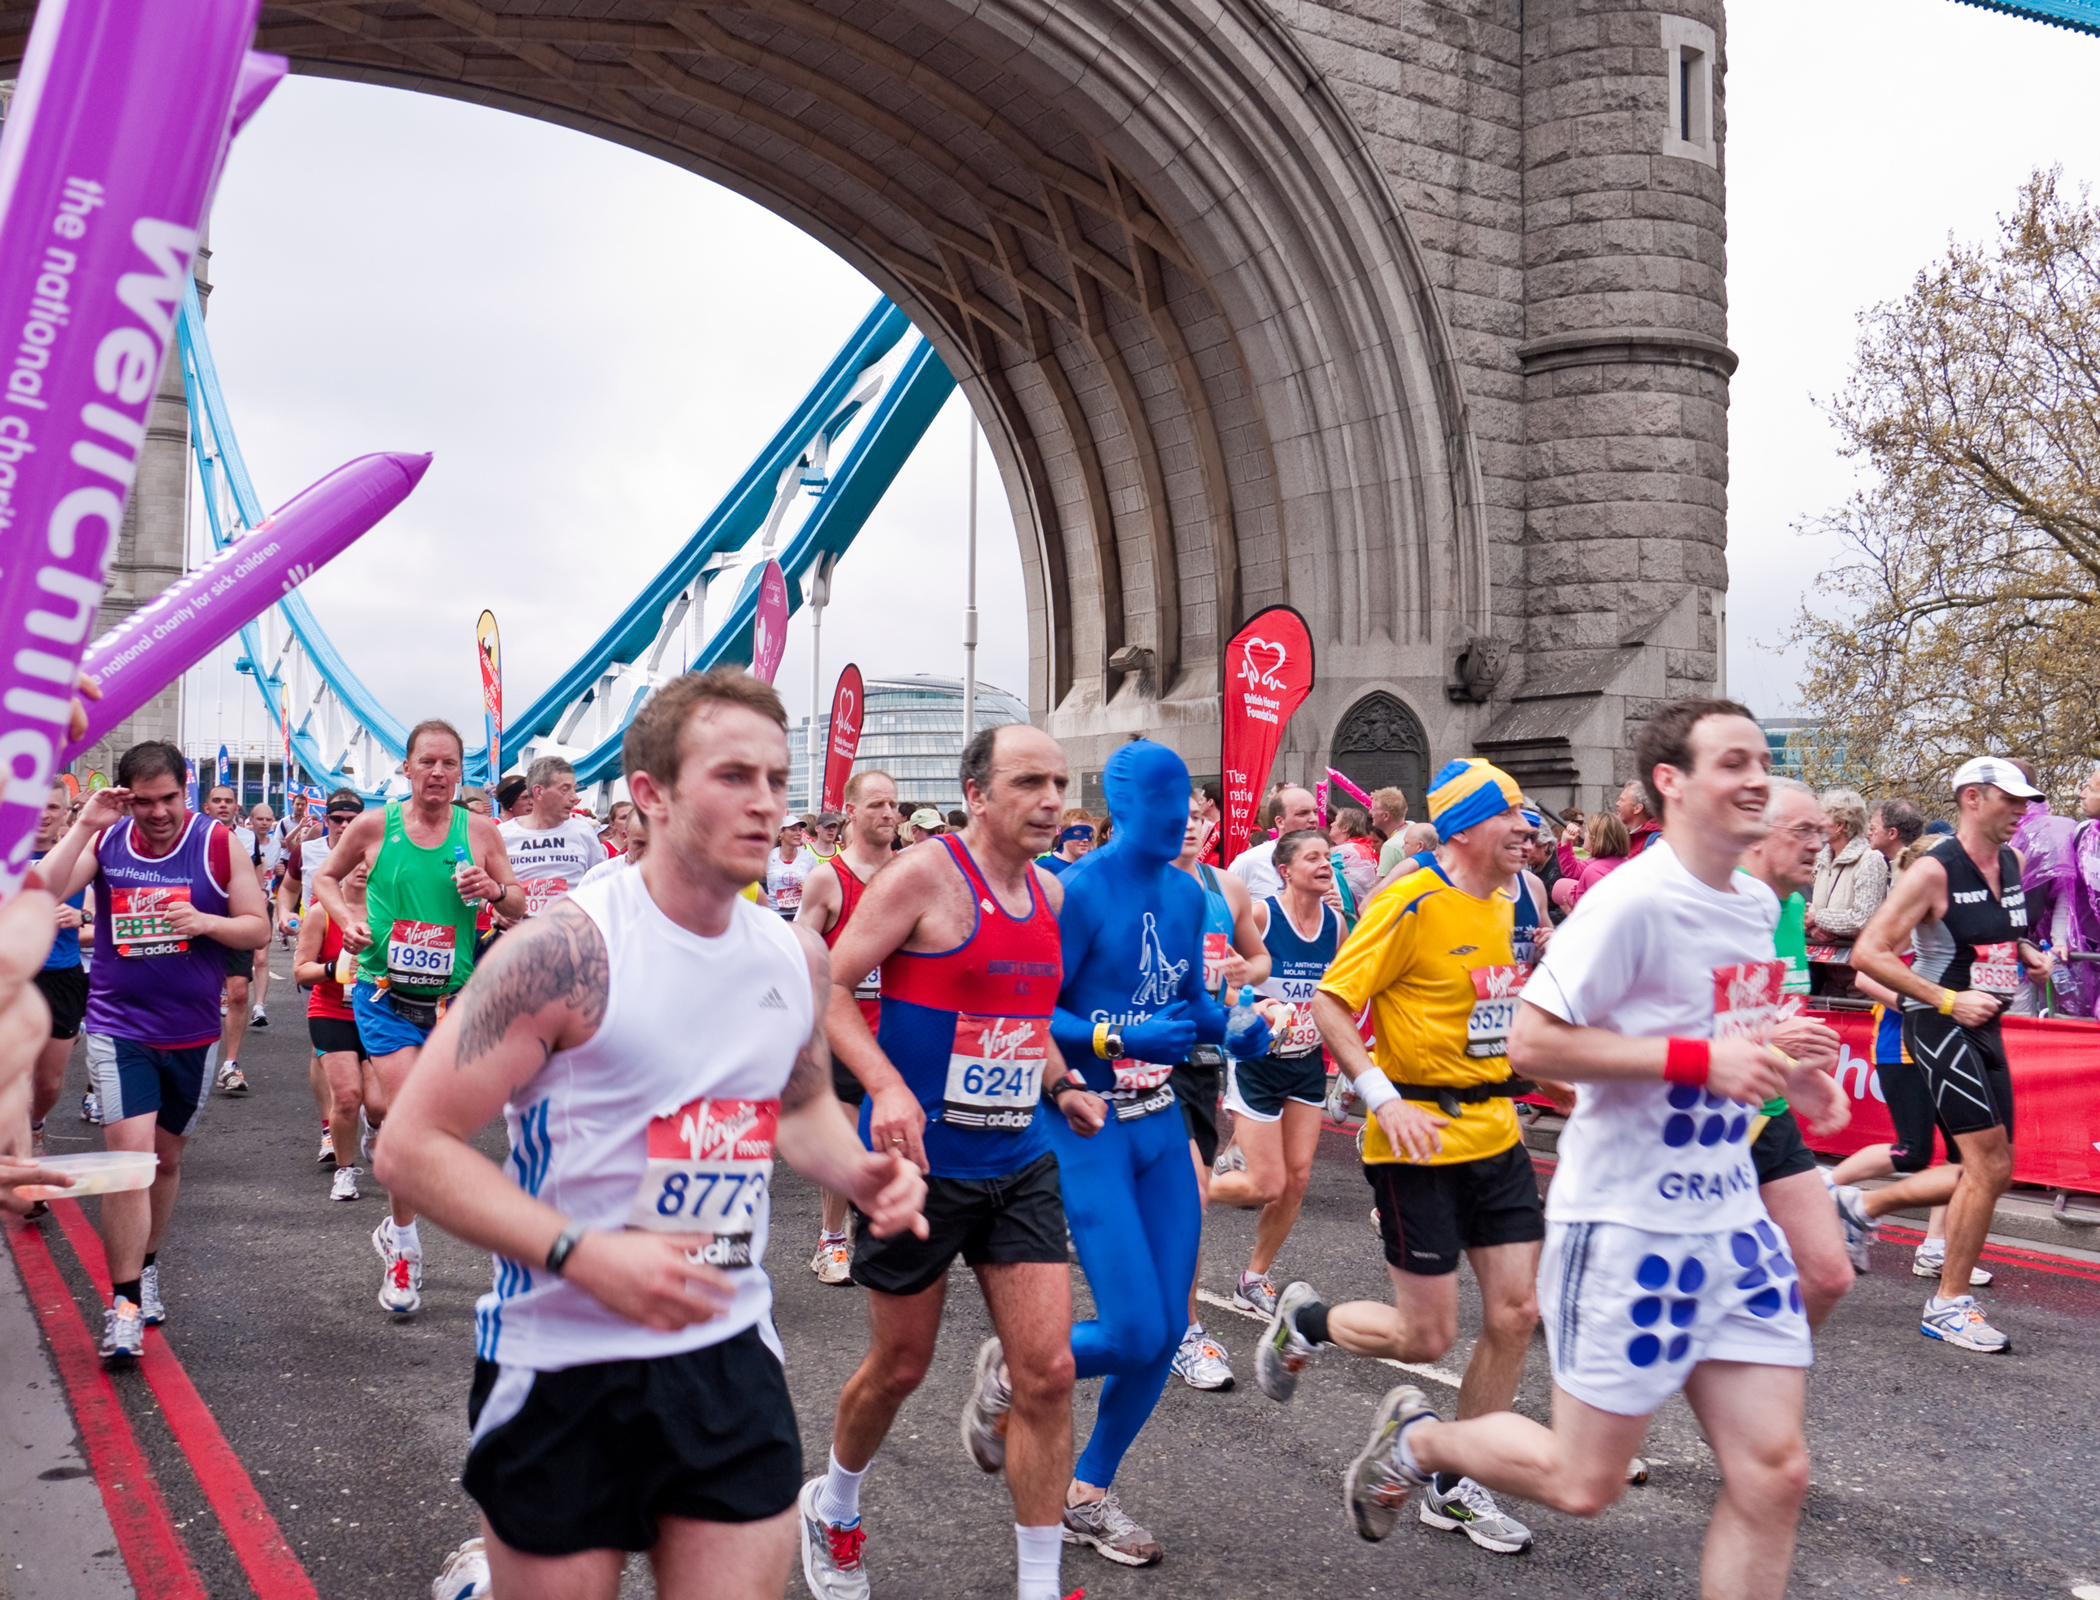 Q&A: Why does TCS sponsor the London Marathon?